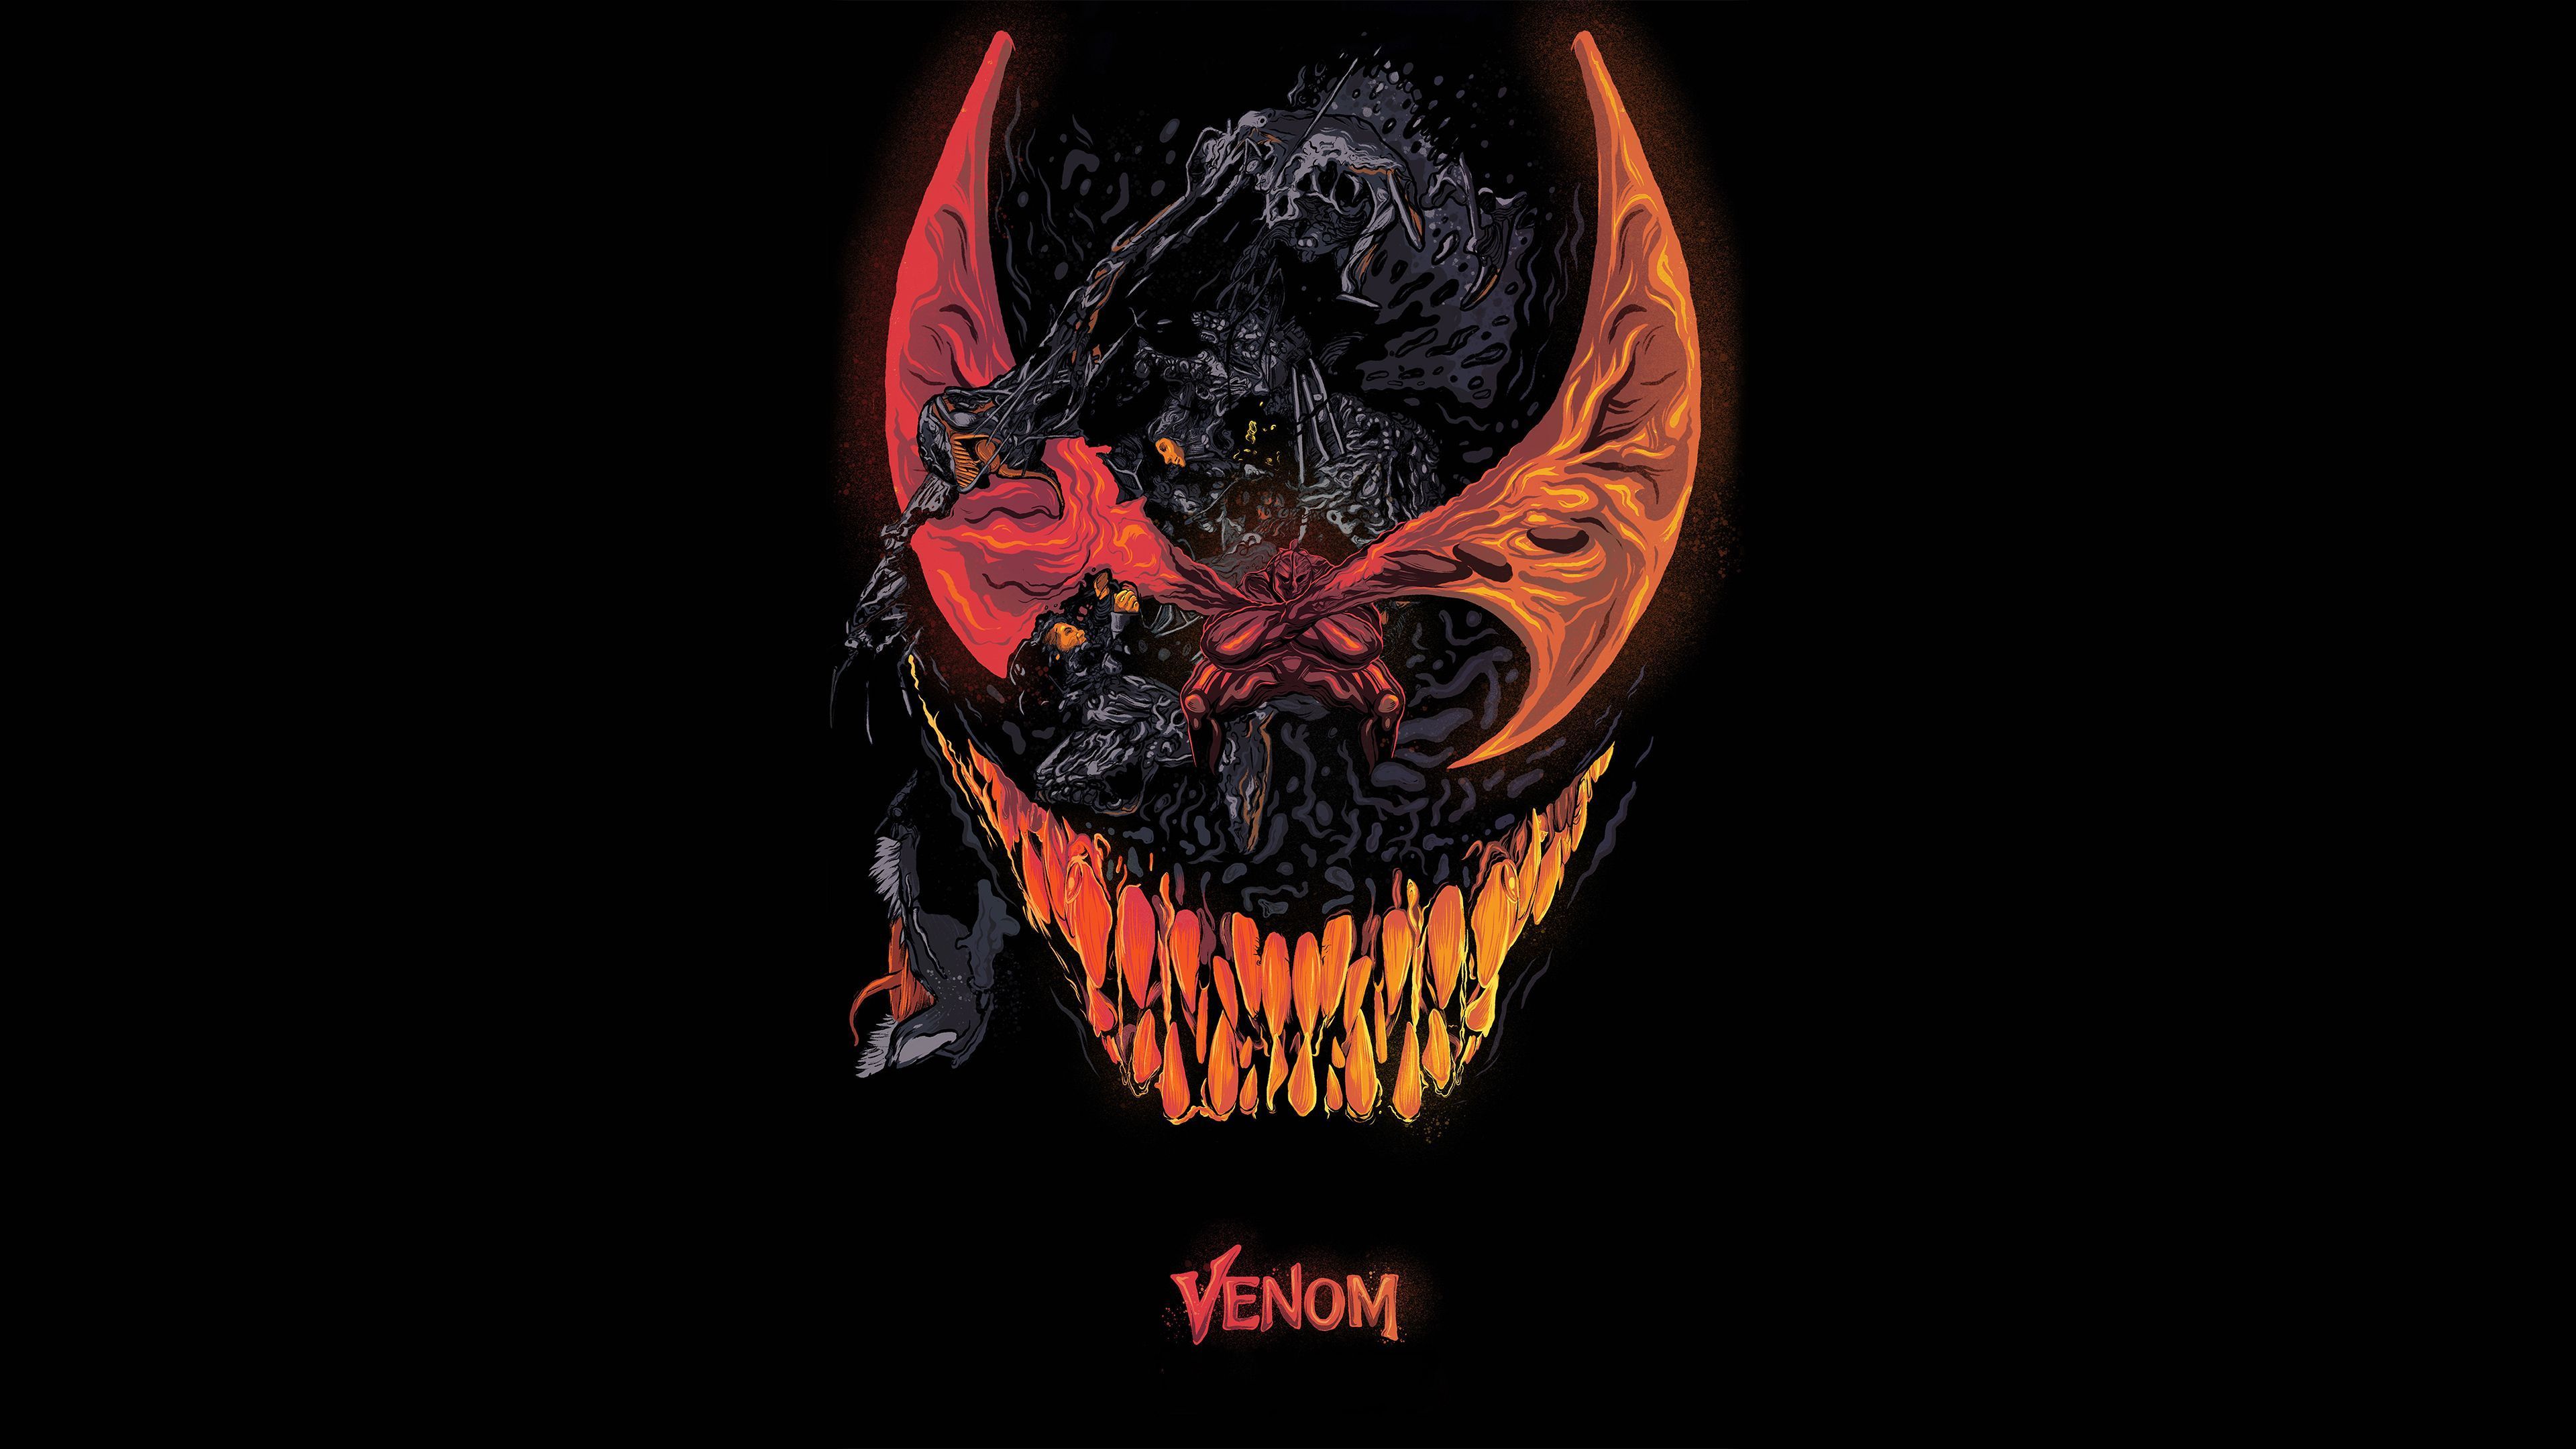 Venom Wallpaper 4k DownloadD Wallpaper. Movie artwork, Movie wallpaper, Venom movie